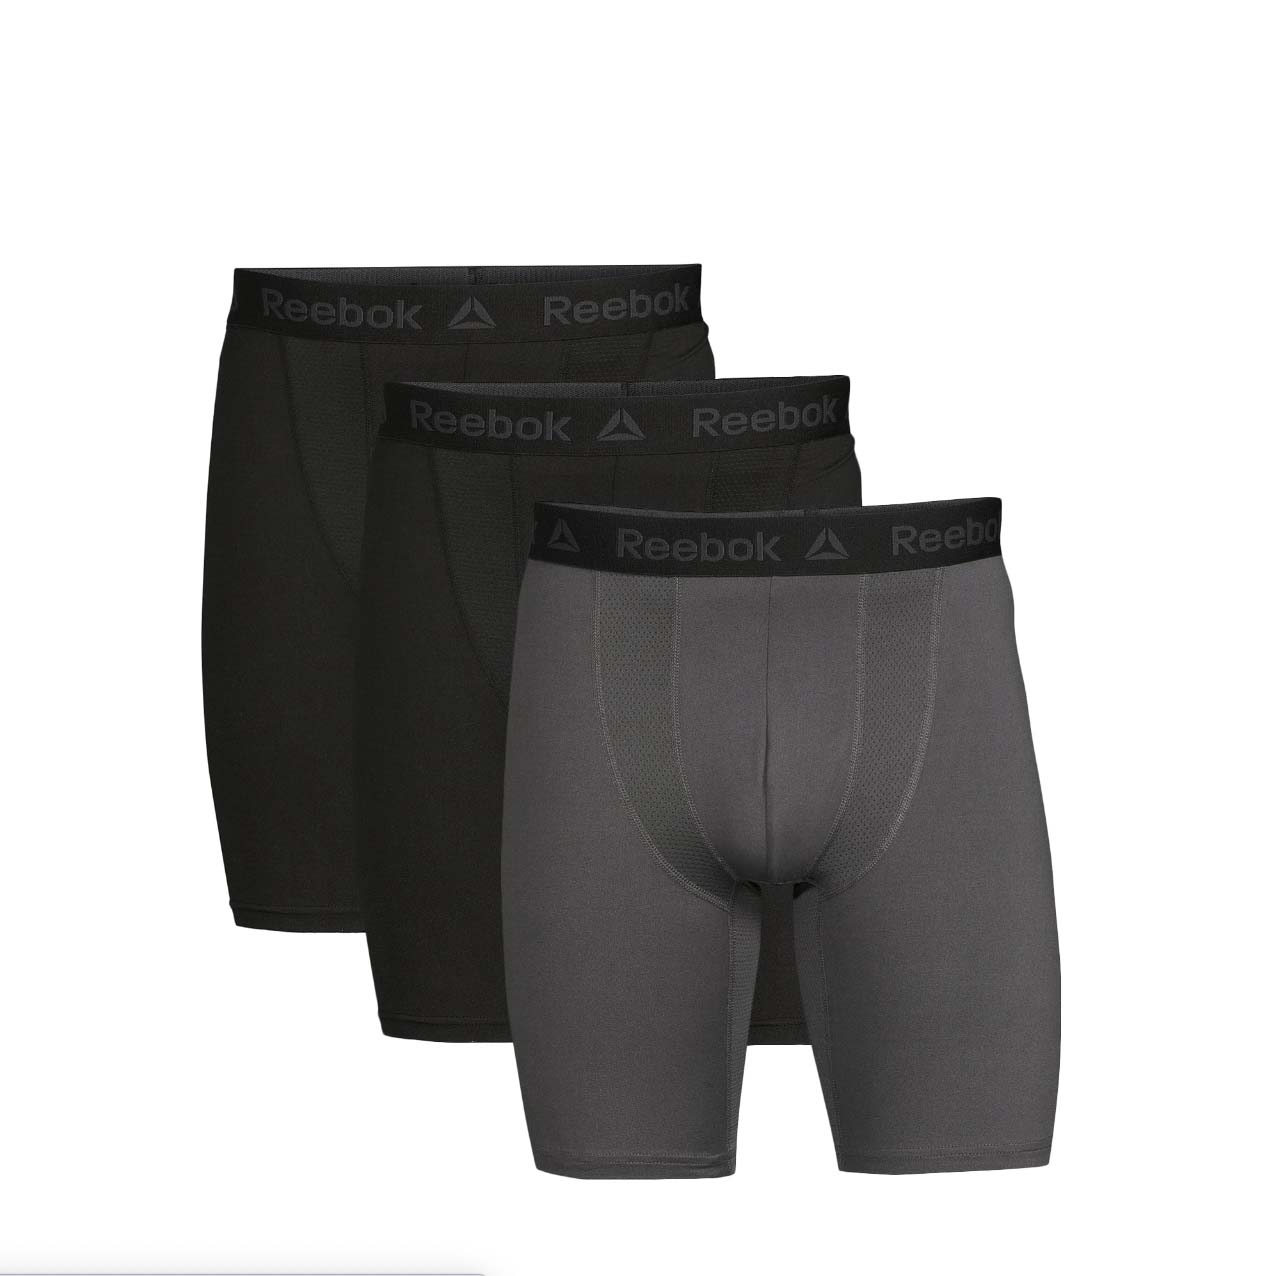 Three pairs of dark-colored reebok long length underwear